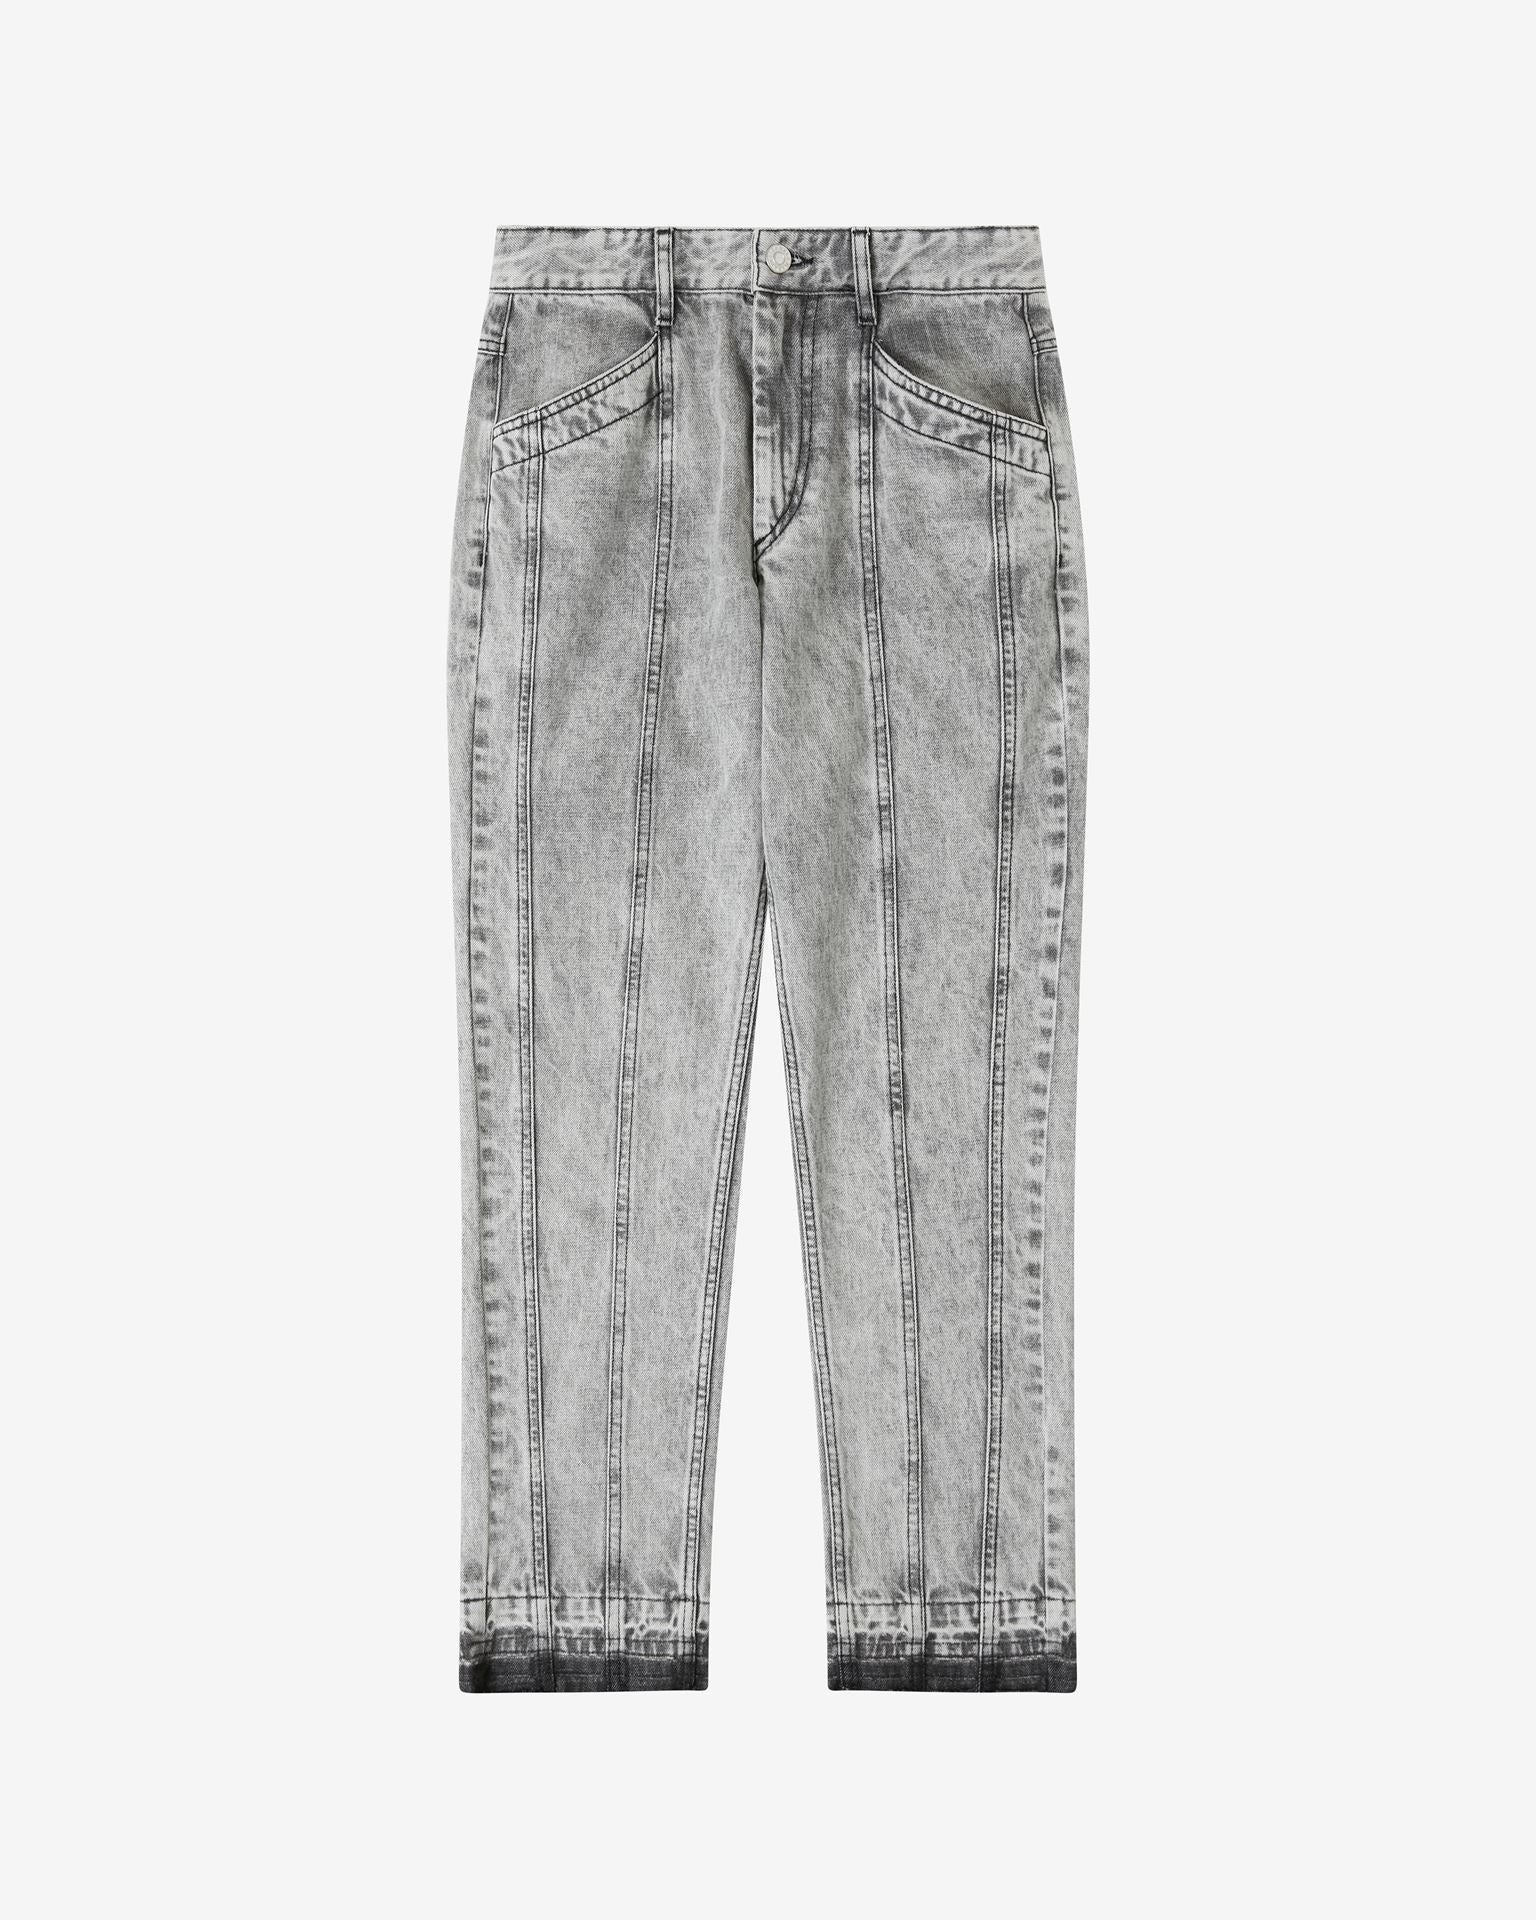 Sulanoa pants, light grey